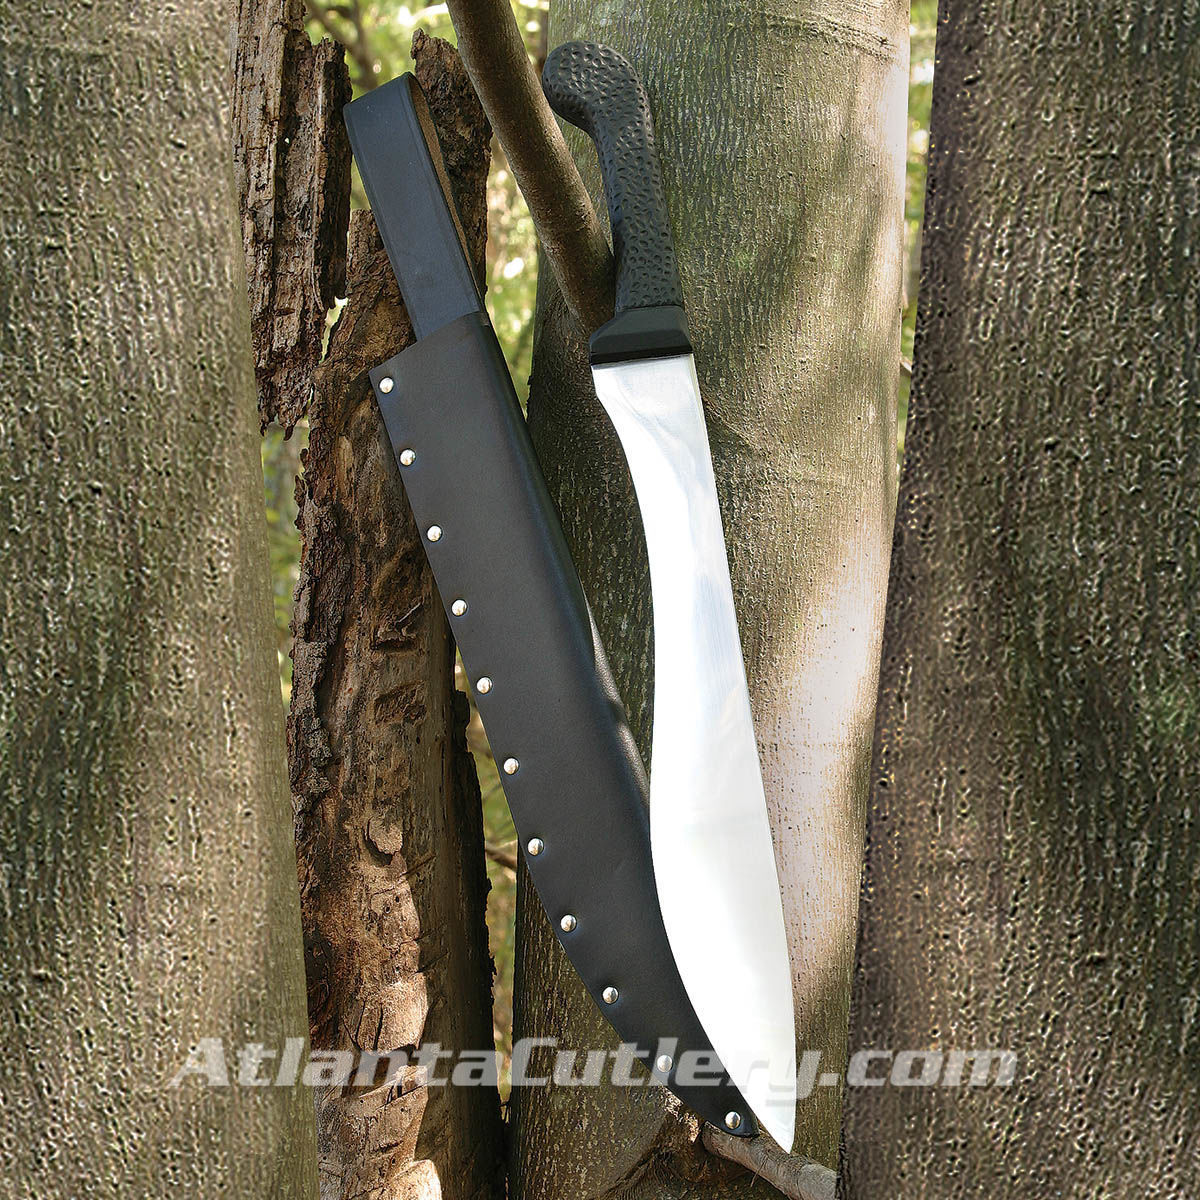 Windlass Cobra Steel Falcata machete has a razor-sharp edge and includes a riveted leather belt sheath